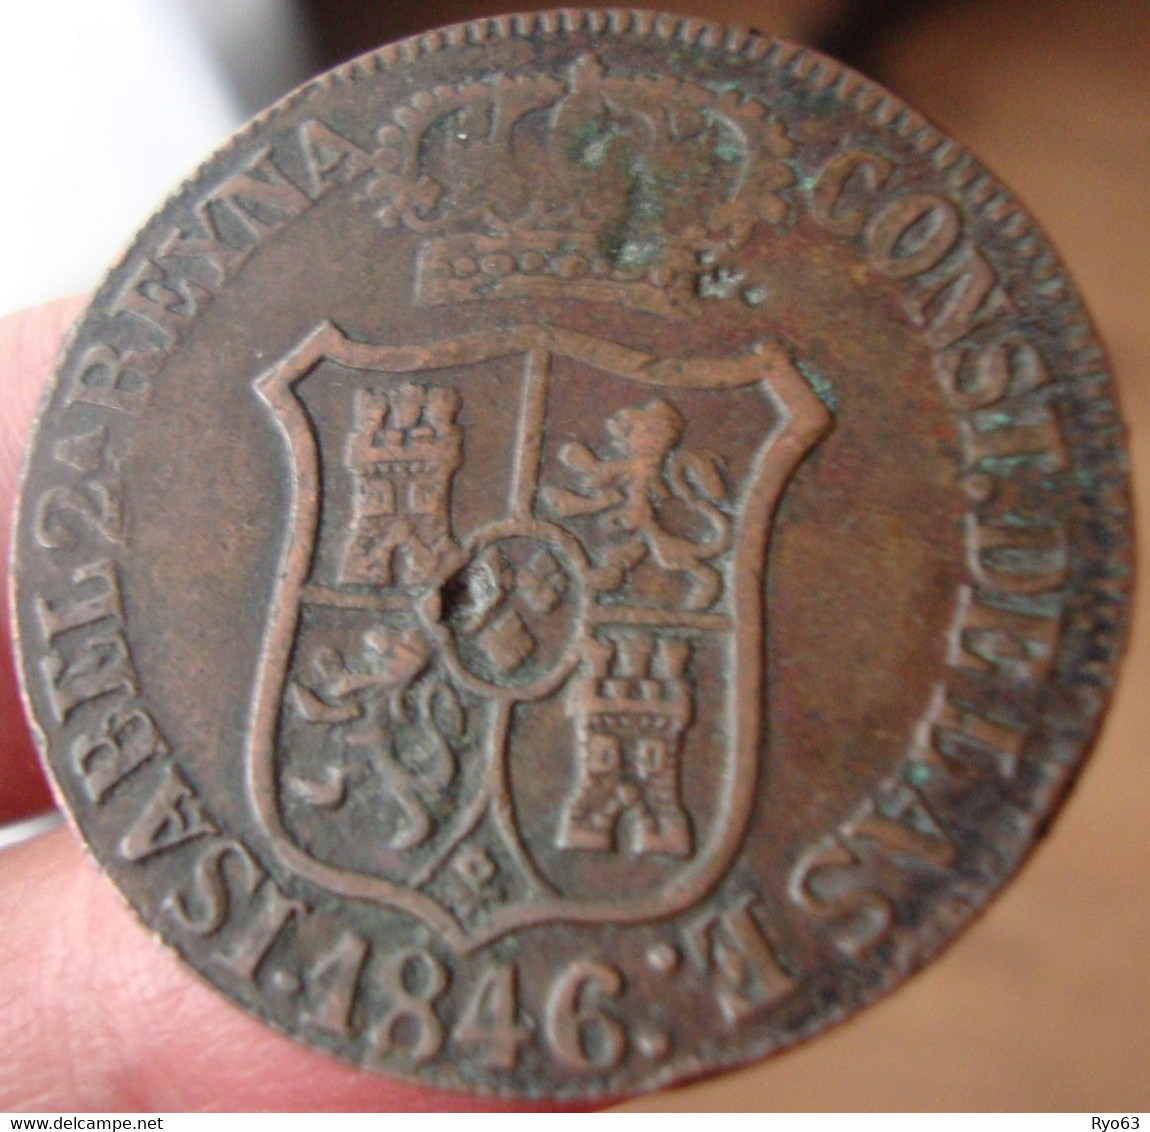 6 Cuartos 1846 Principauté De Catalogne - Münzen Der Provinzen